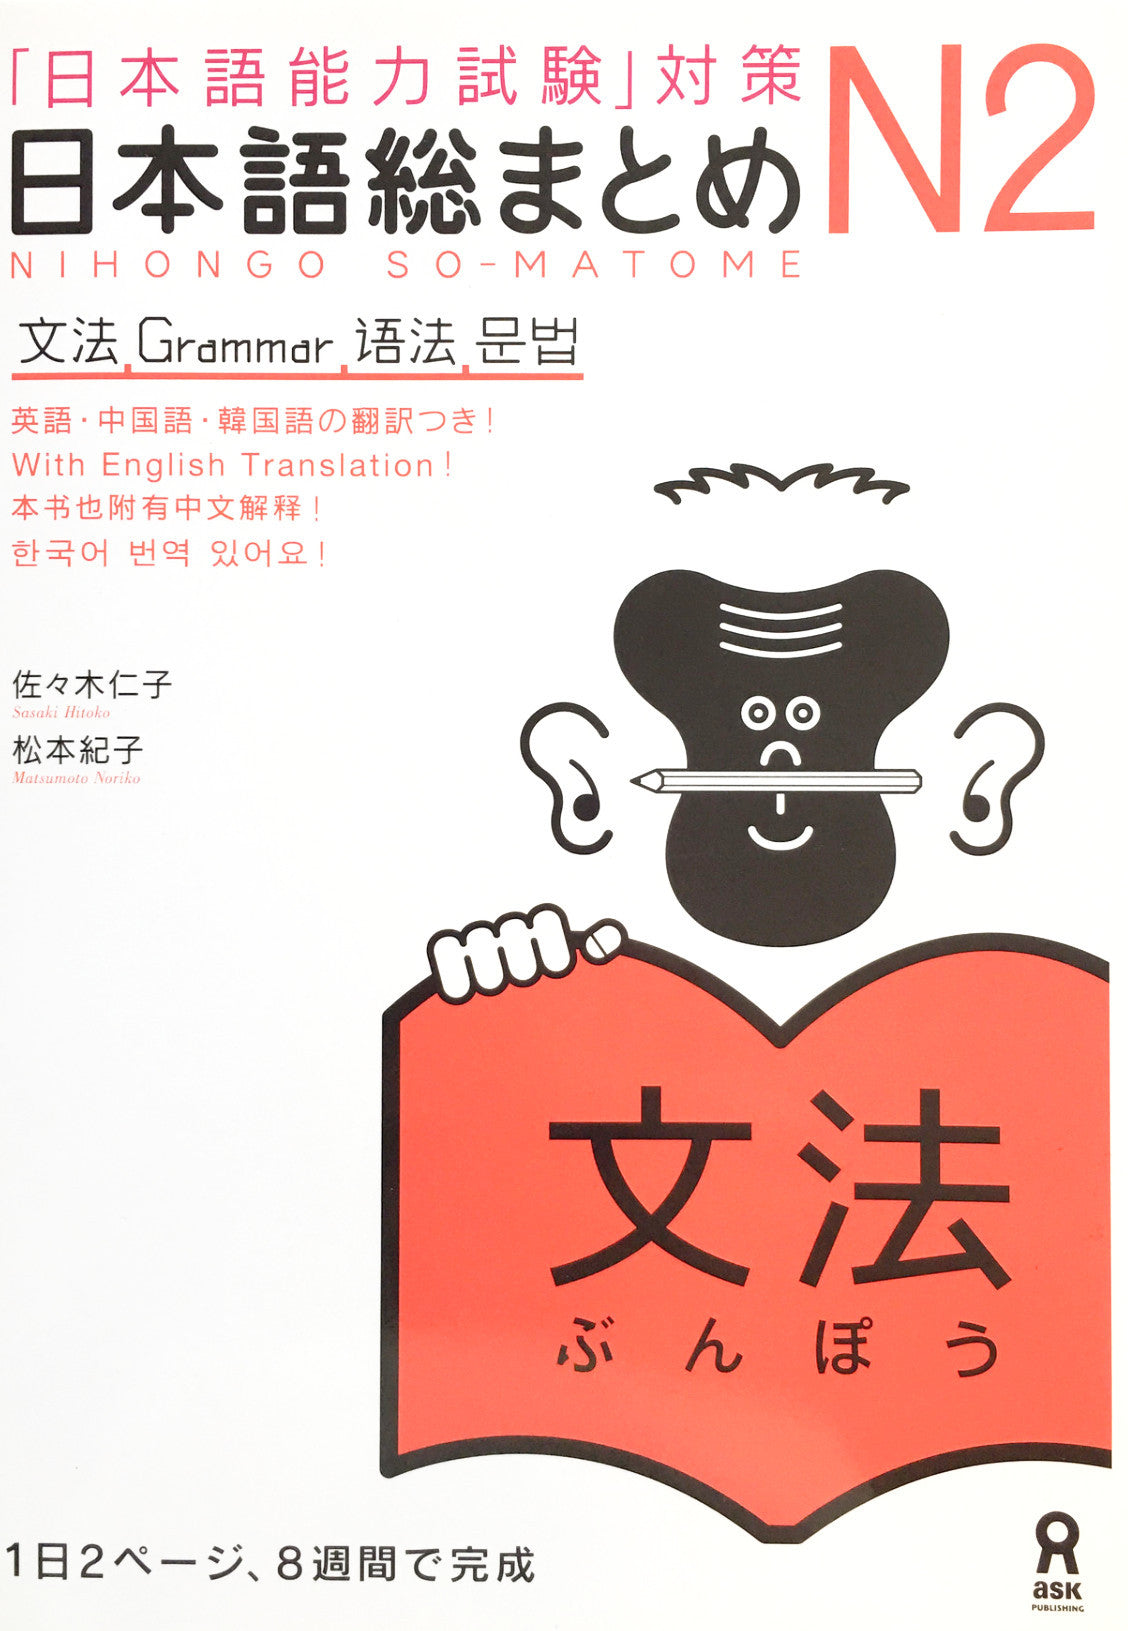 Nihongo So-matome N2 Grammar - The Japan Shop